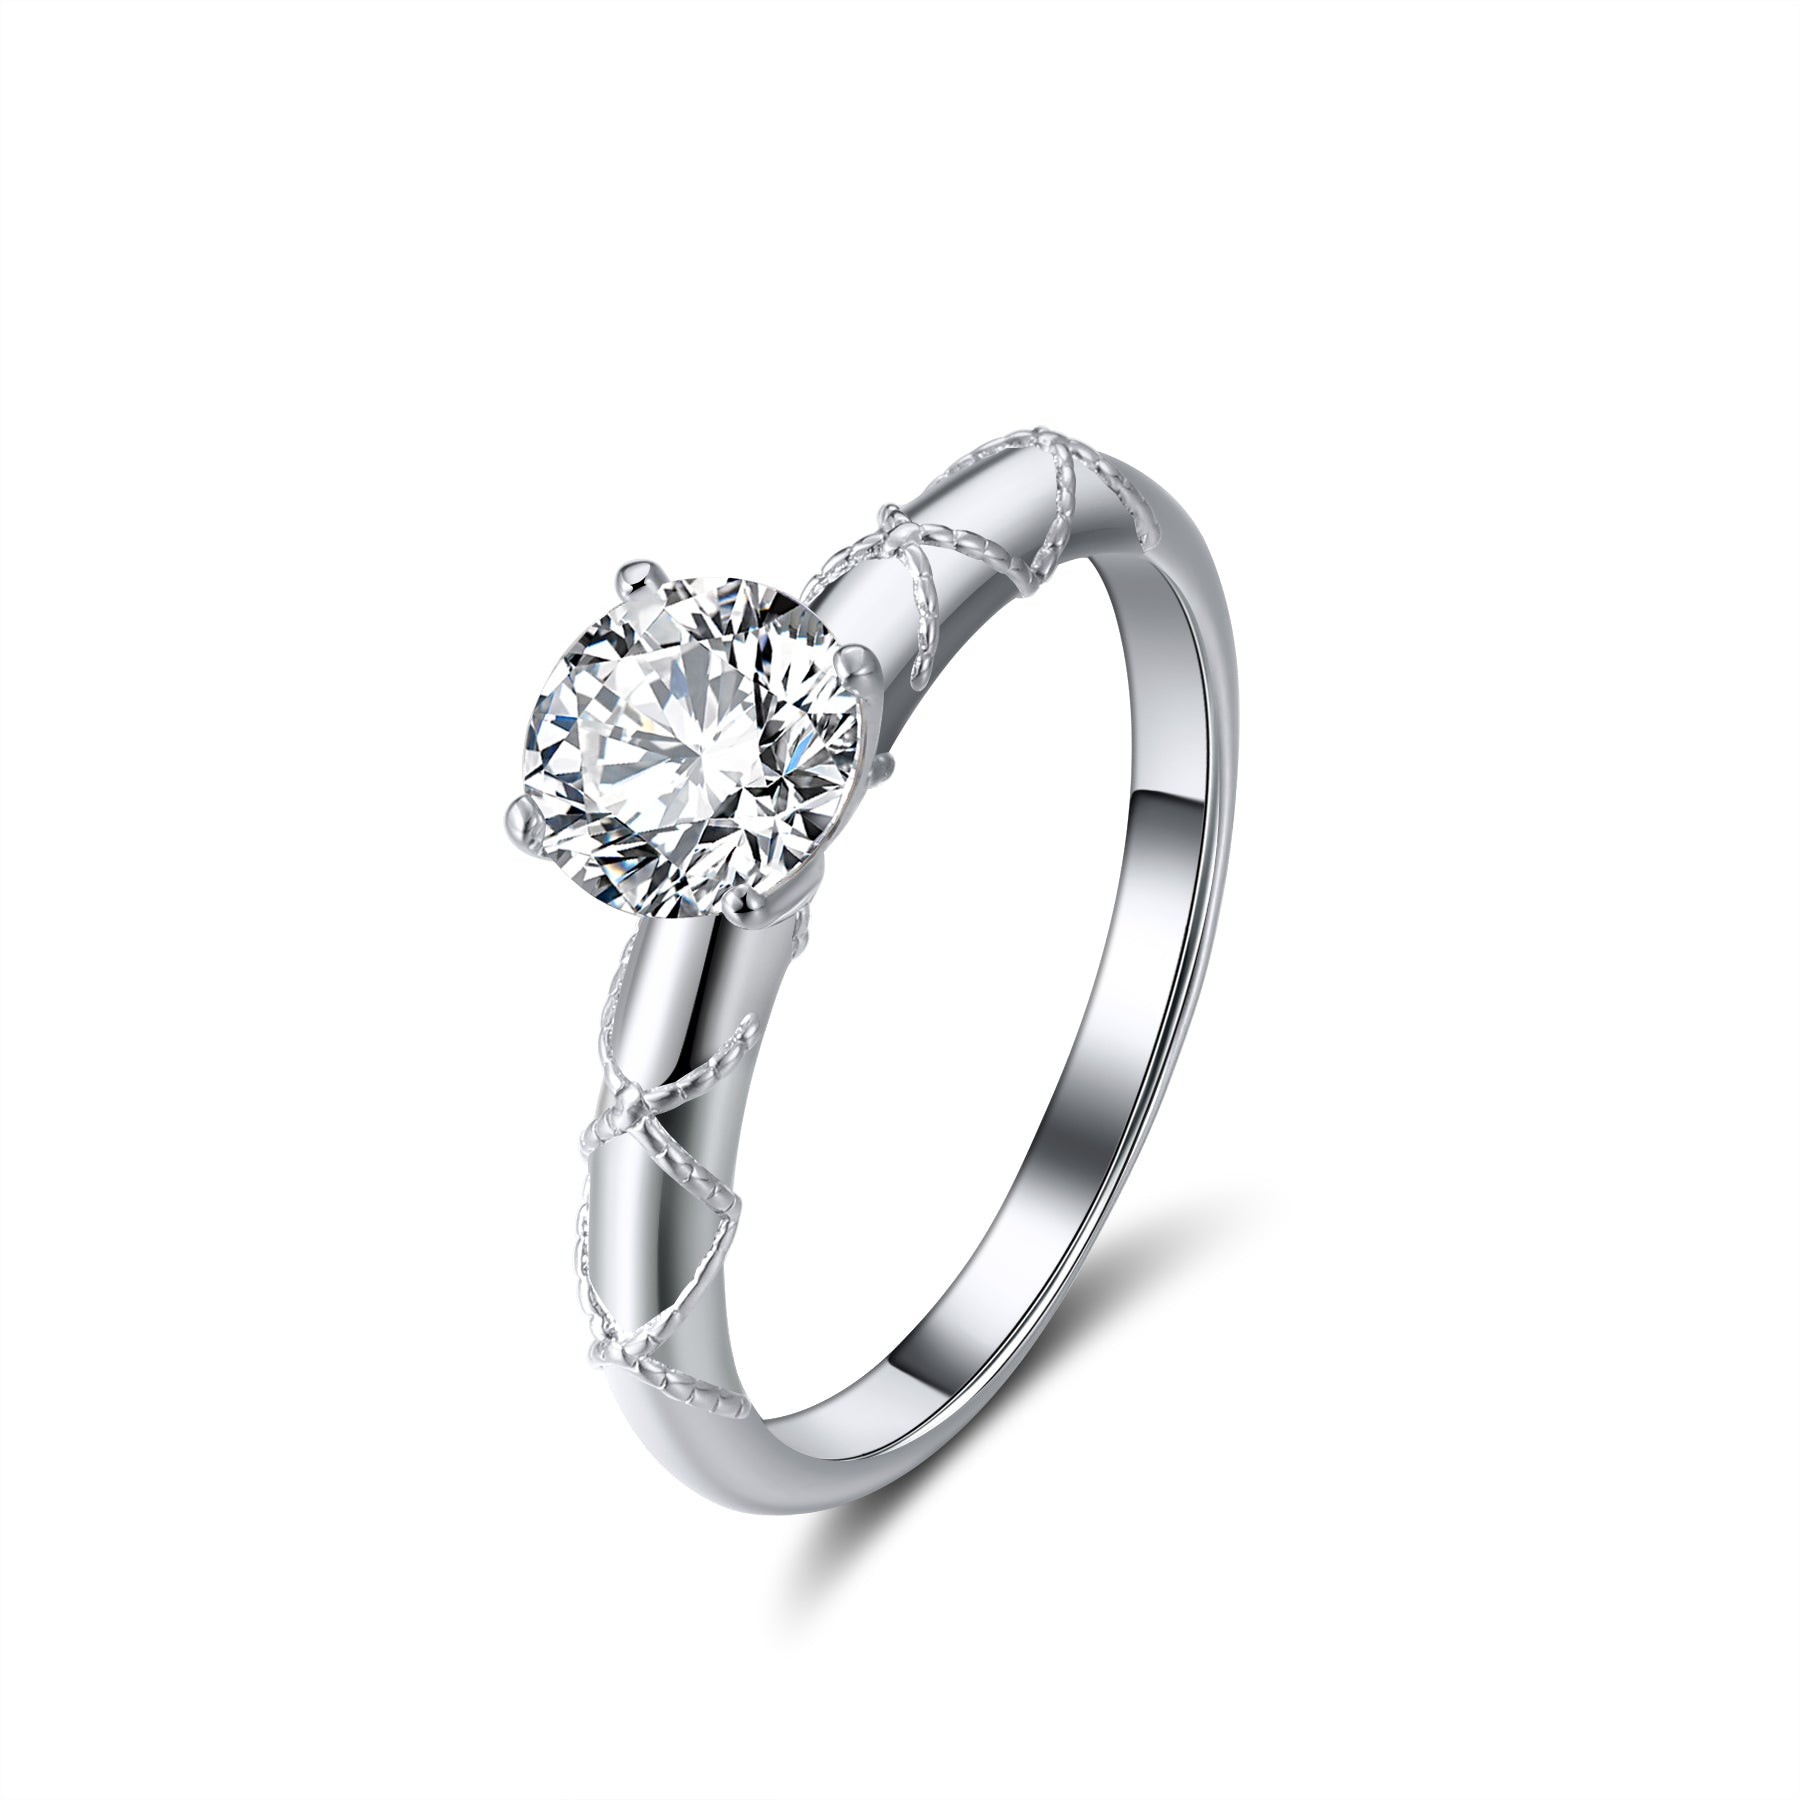 Amore Mia Engagement Ring Women 1 Ct Moissanite Sterling Silver Ginger Lyne - White Gold Trim,7